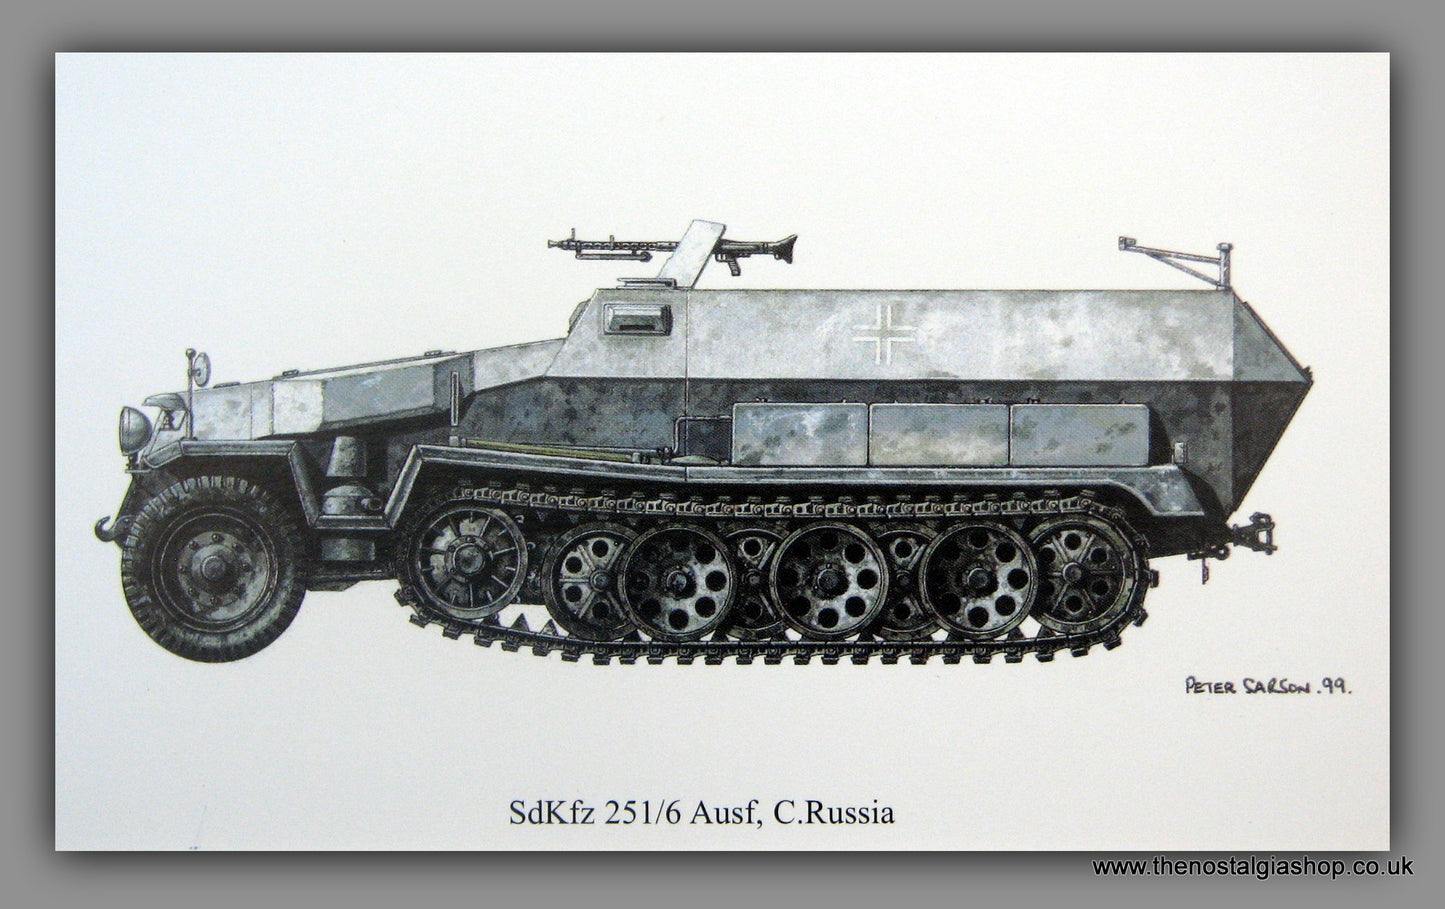 SdKfz 251/6 Ausf, C. Russia. German Vehicle. Mounted Print